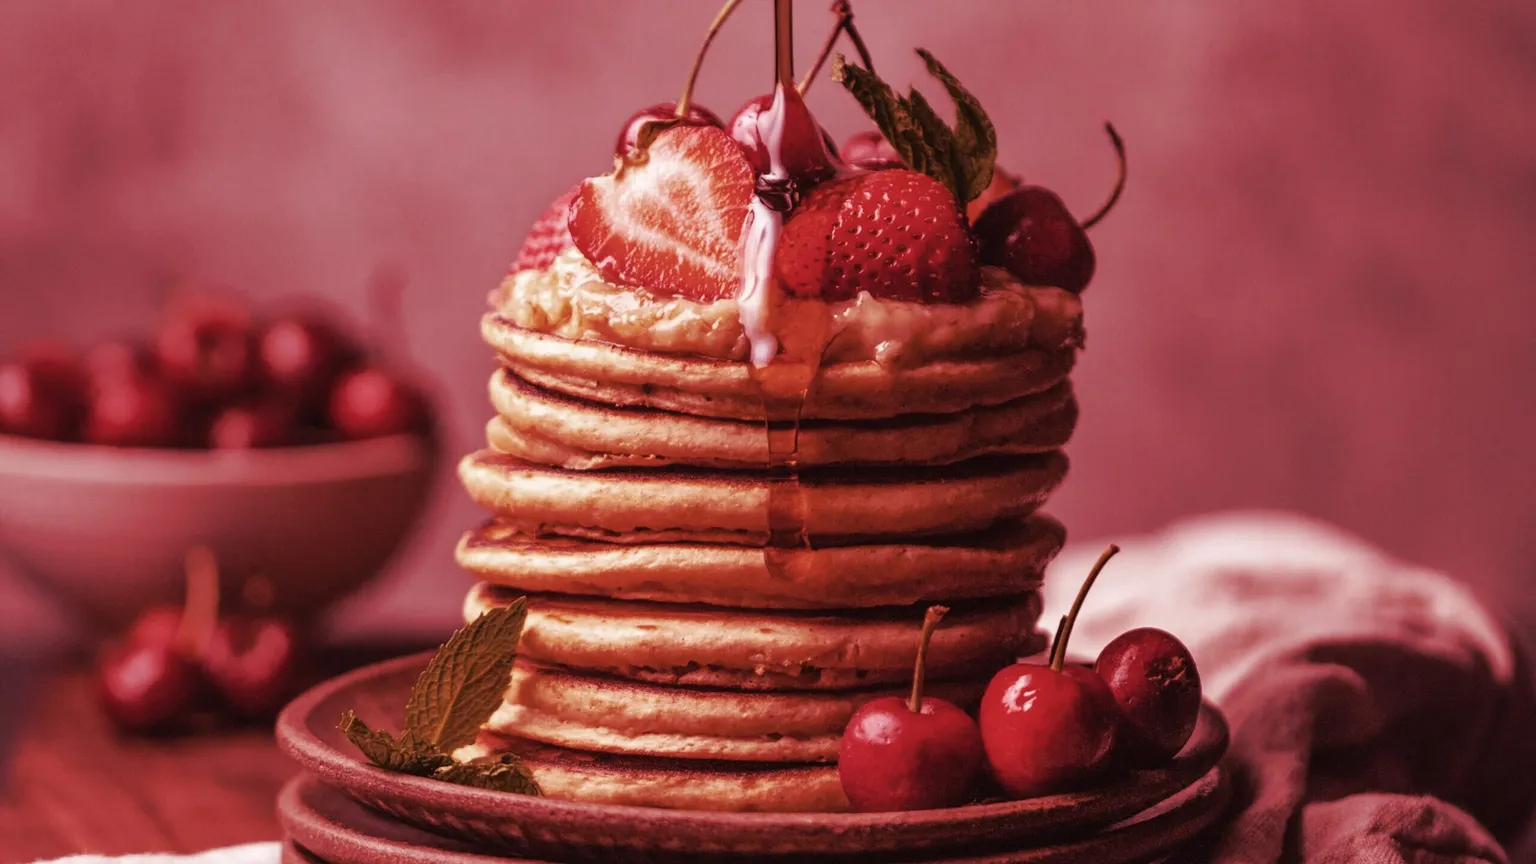 A stack of pancakes. Image: Unsplash